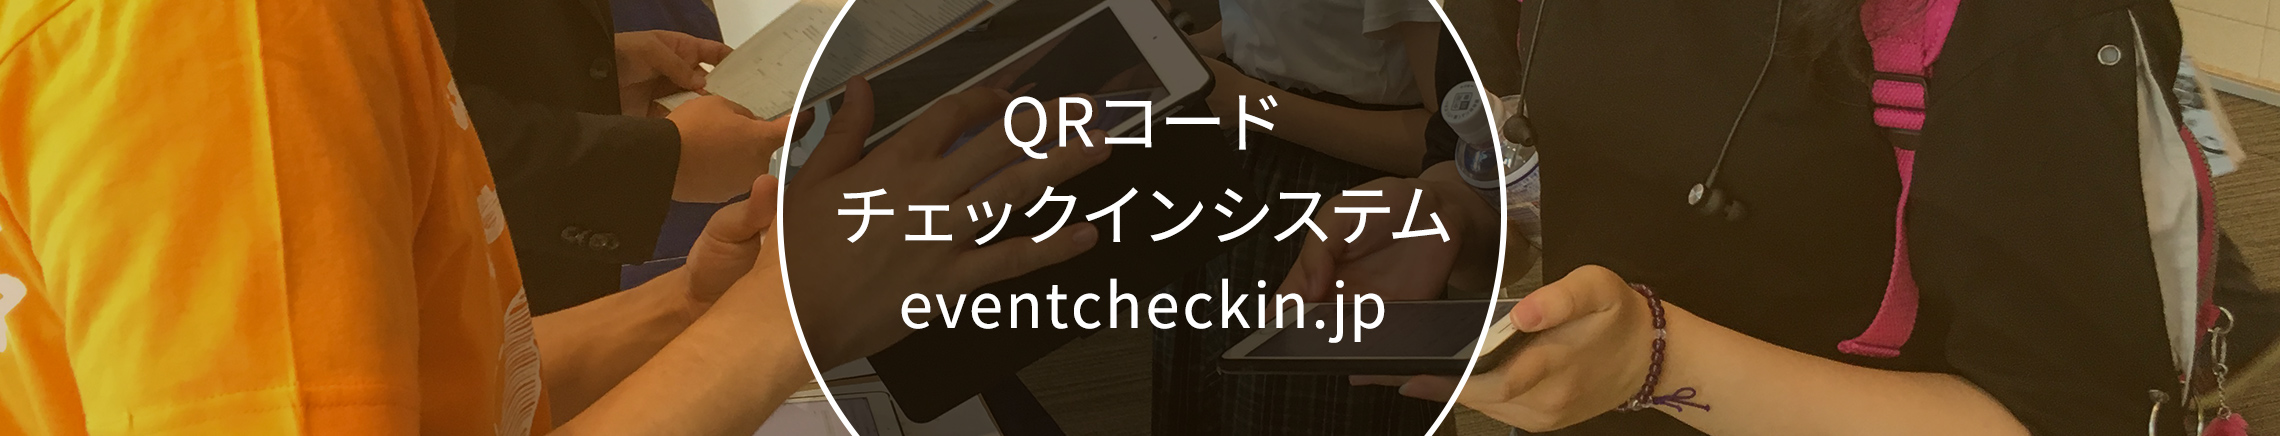 QRコードチェックインシステム eventcheckin.jp